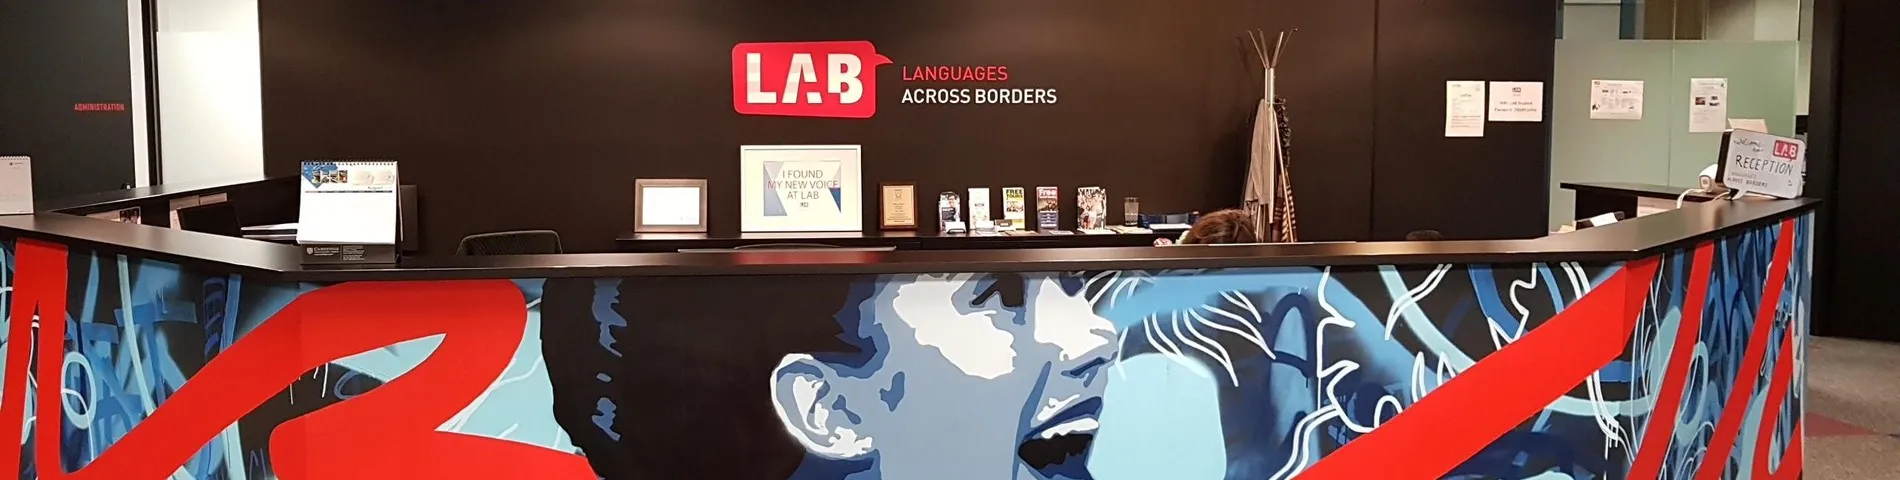 LAB - Languages Across Borders зображення 1